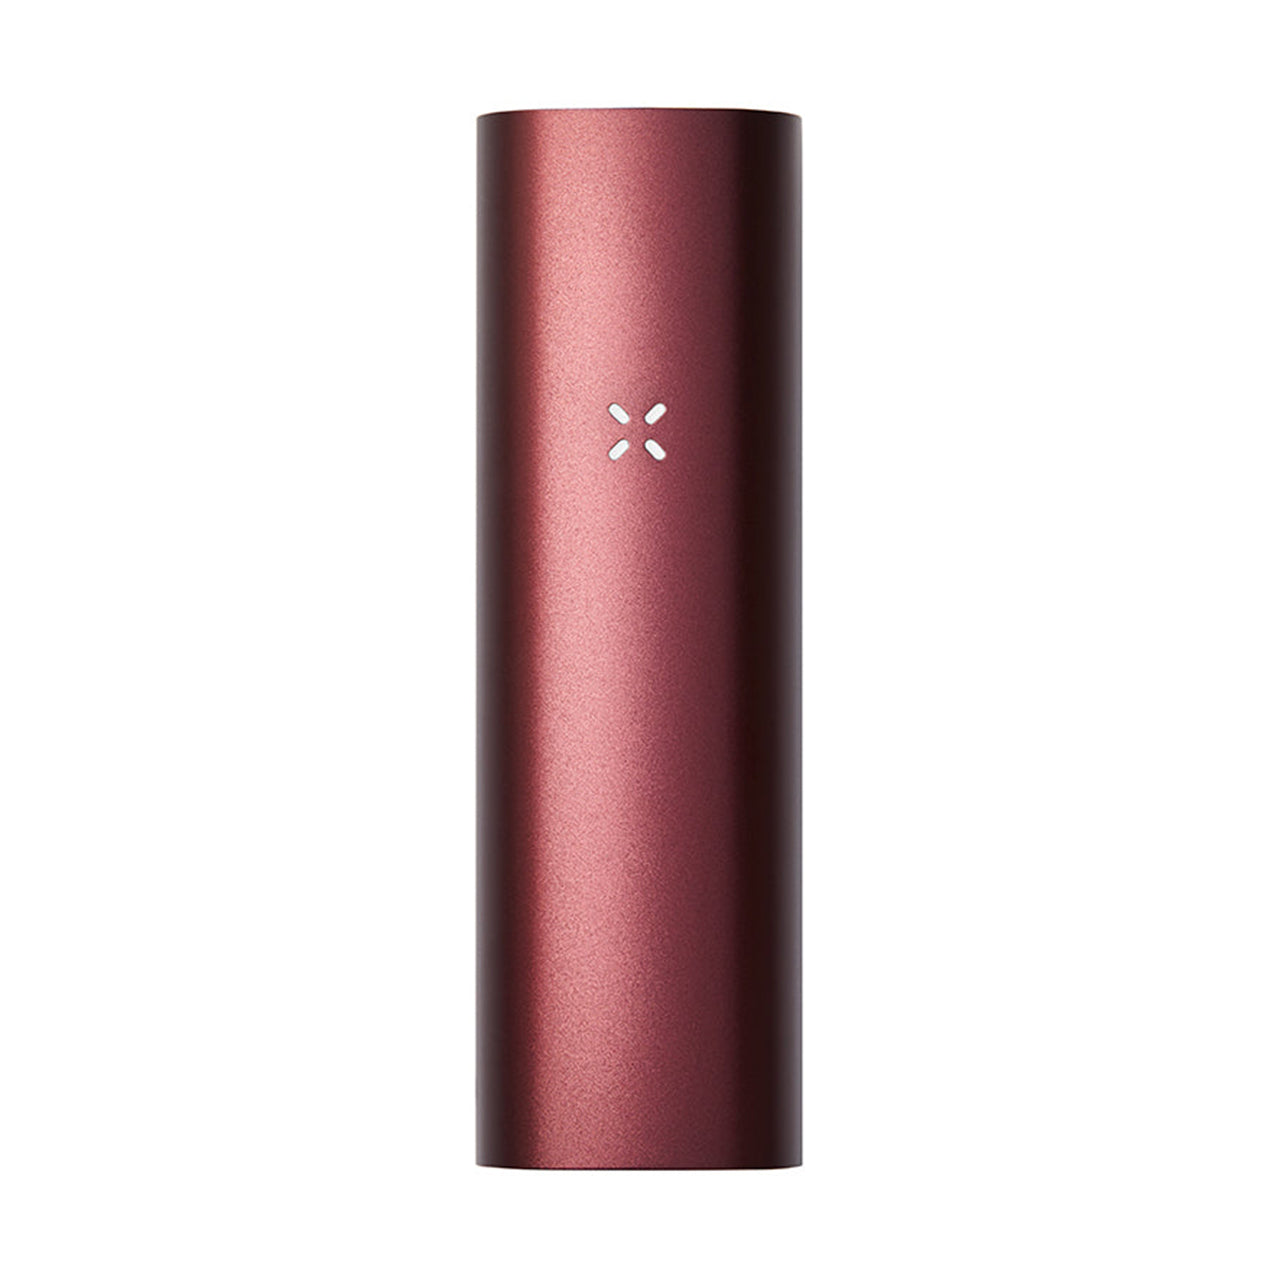 pax 3 portable herb vaporizer burgundy red